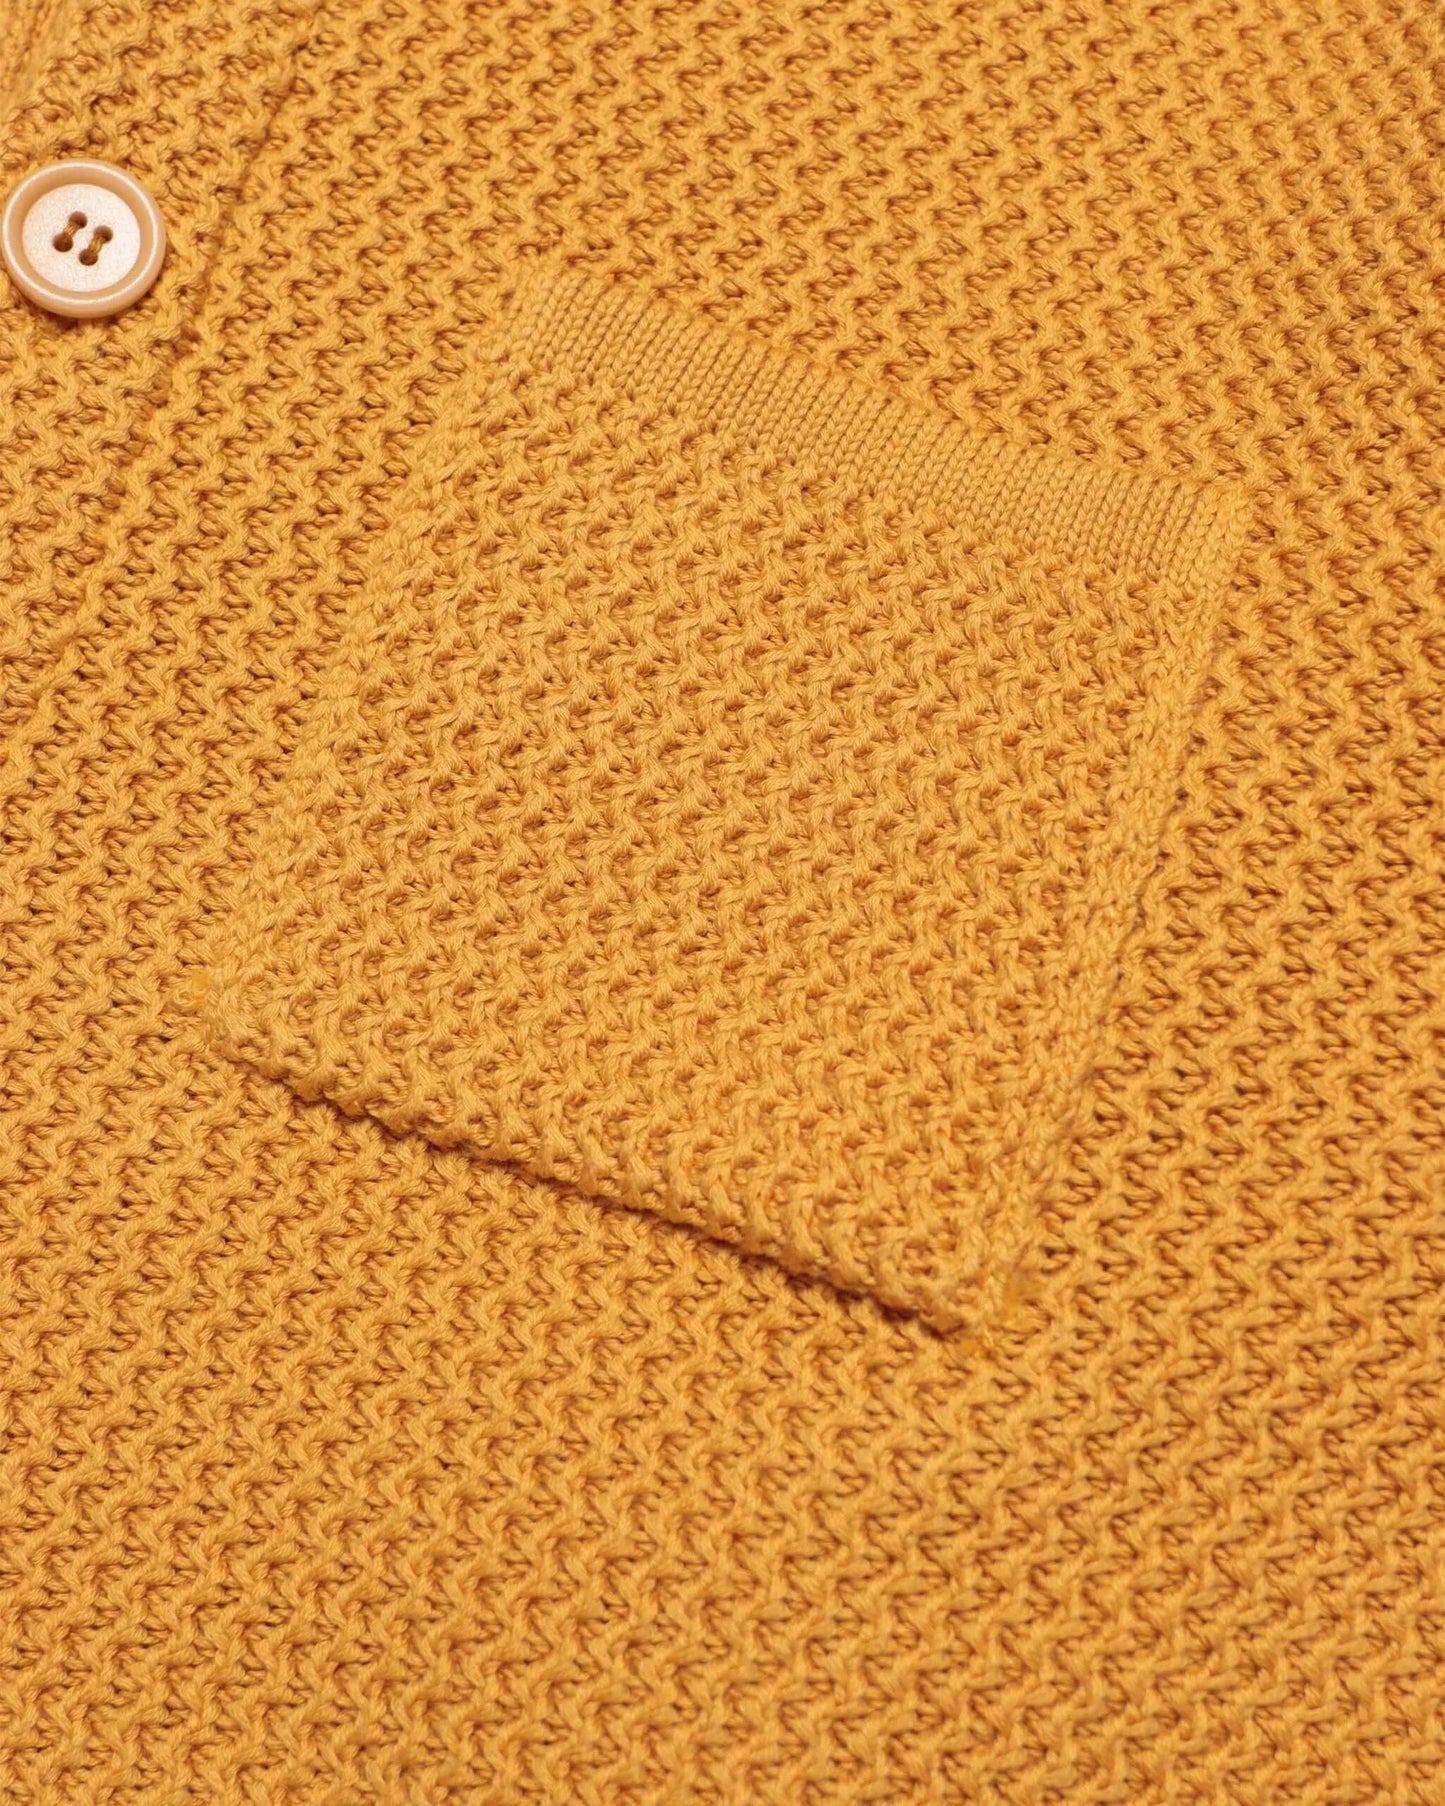 Far Afield STATION Cardigan Honey Gold Ribbed Crochet